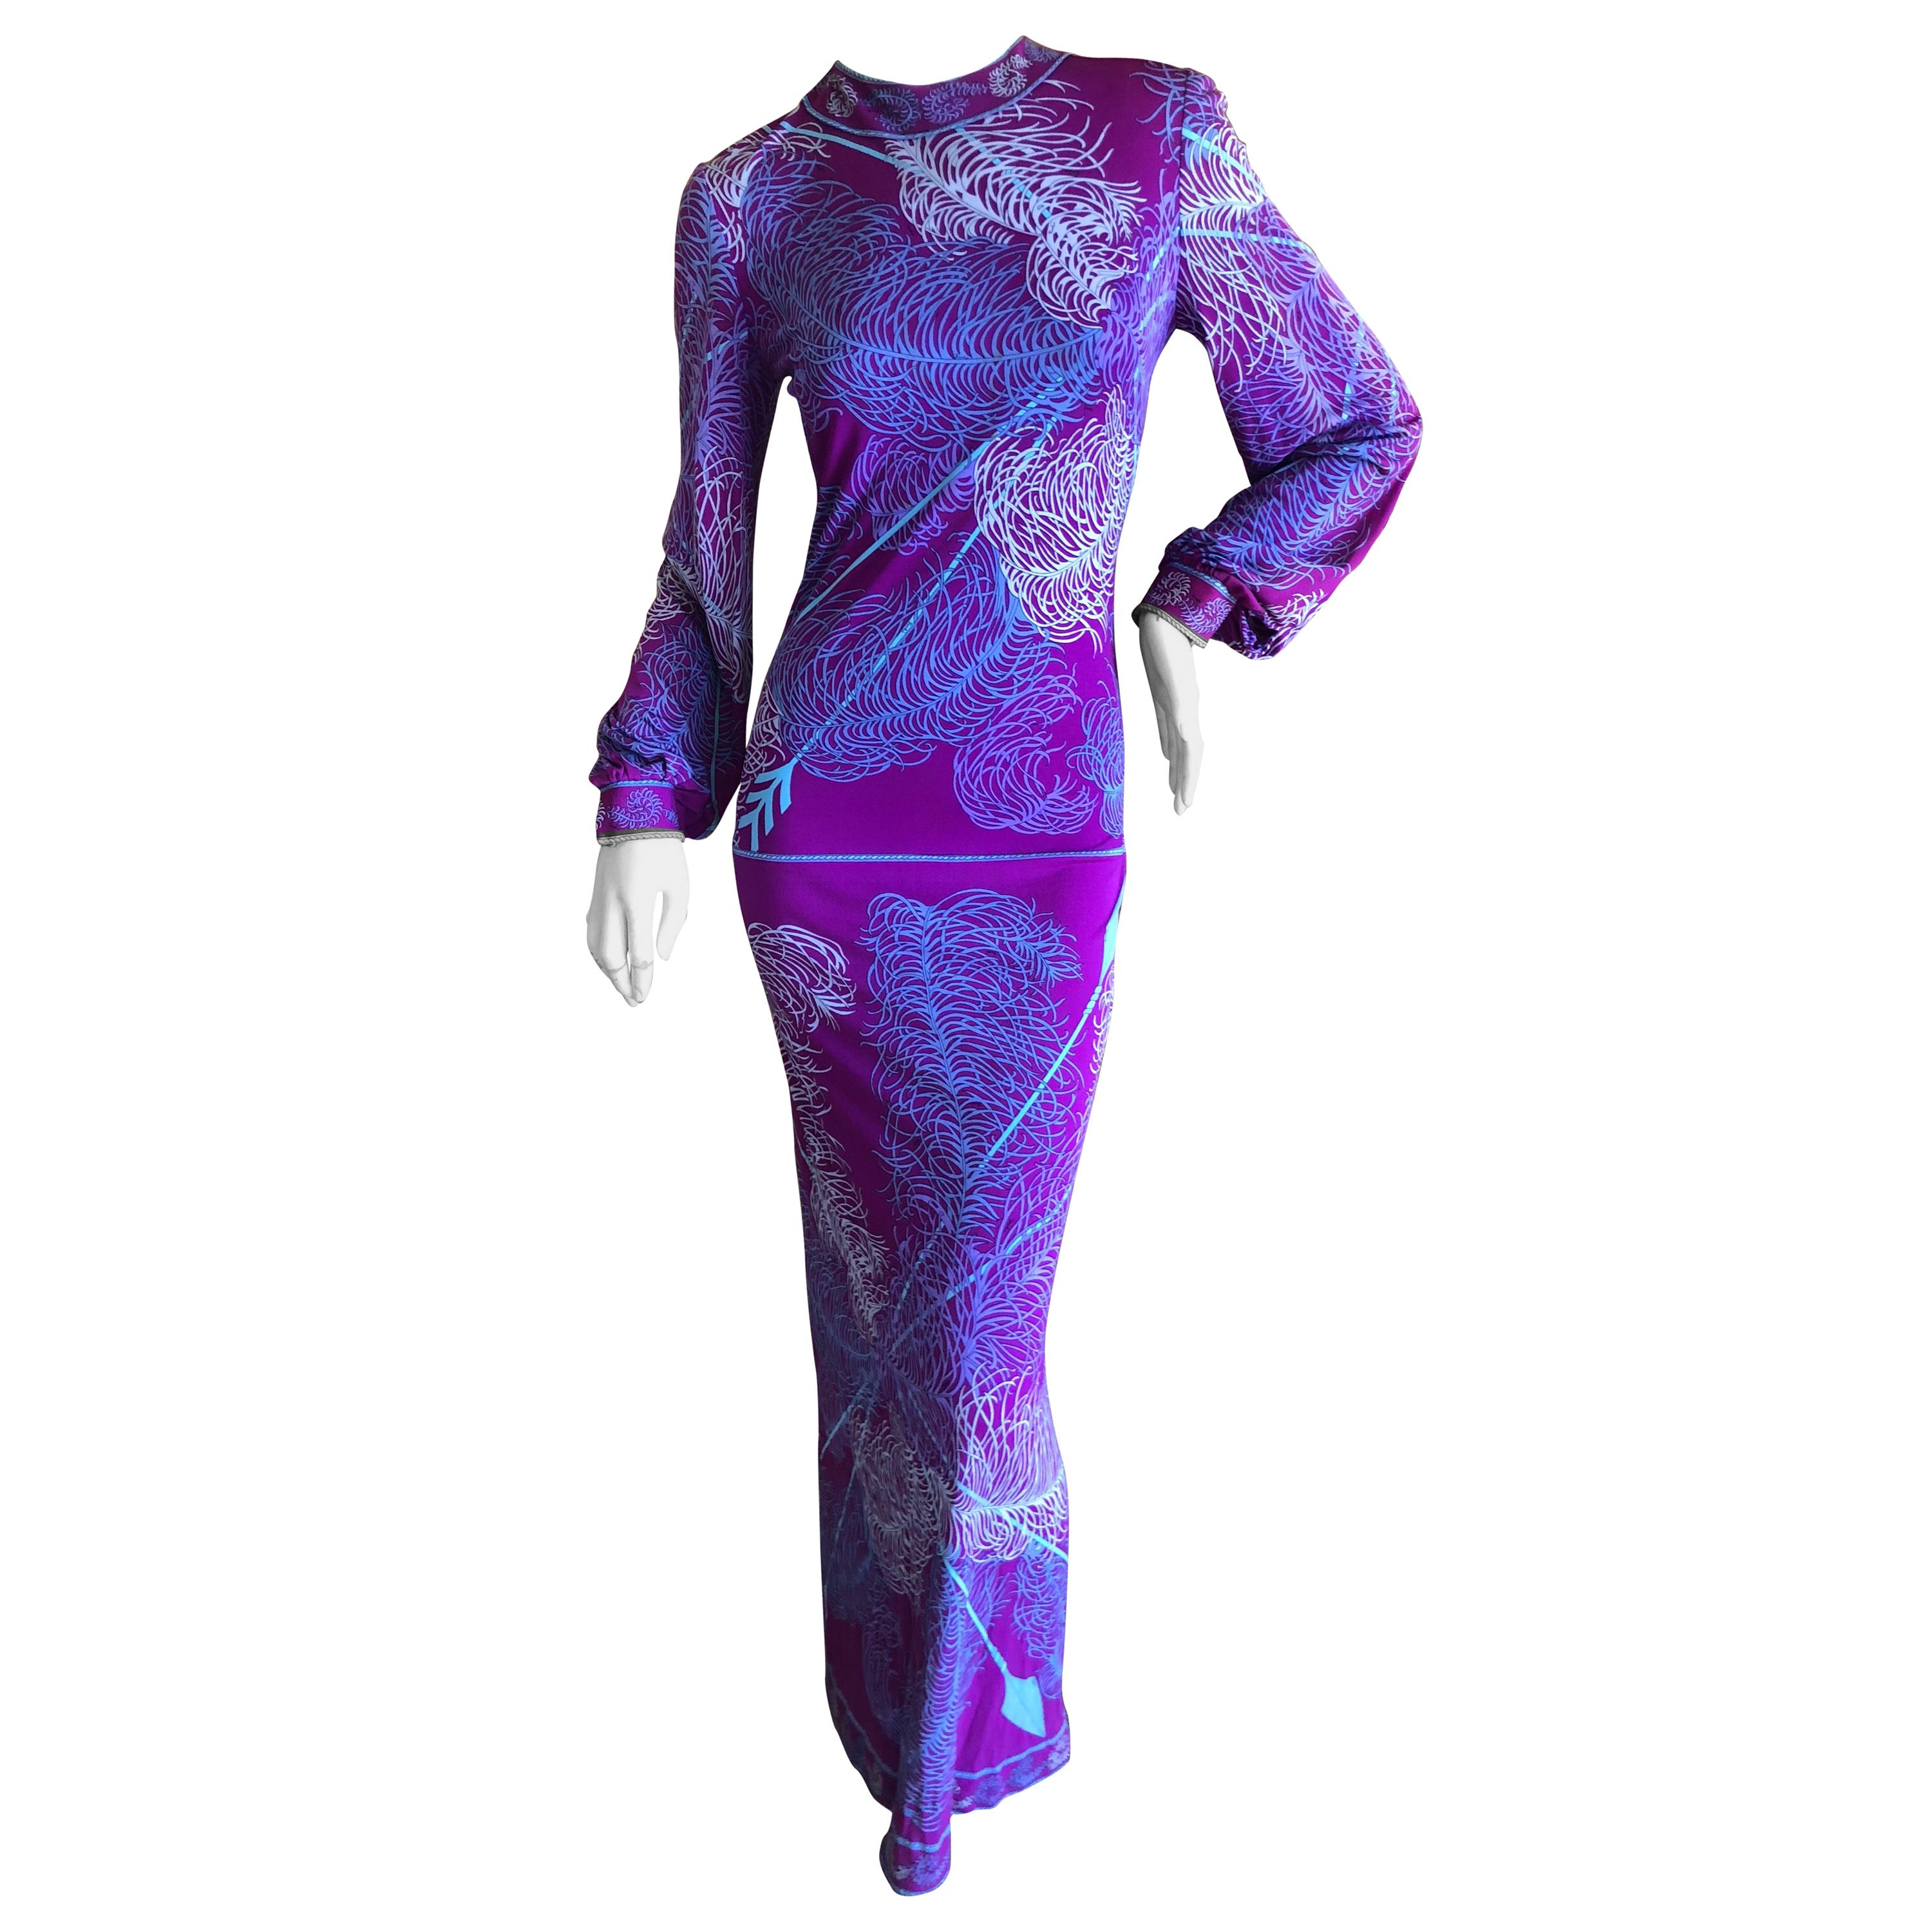 Emilio Pucci Vintage 1960's Silk Jersey Evening Dress for Saks Fifth Avenue